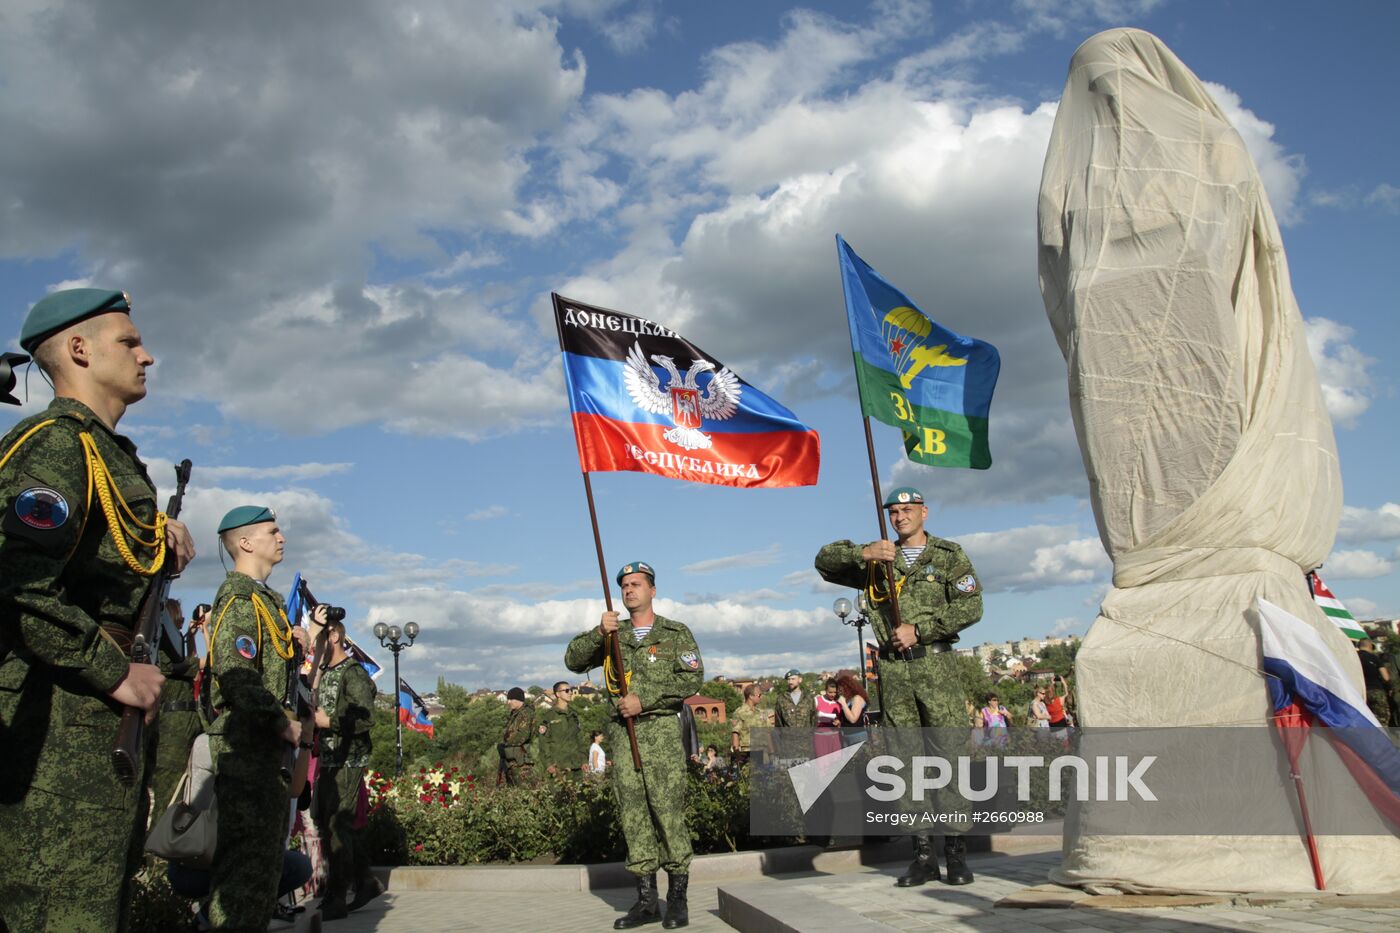 Monument to Soviet commander Vasily Marglov unveiled in Donetsk